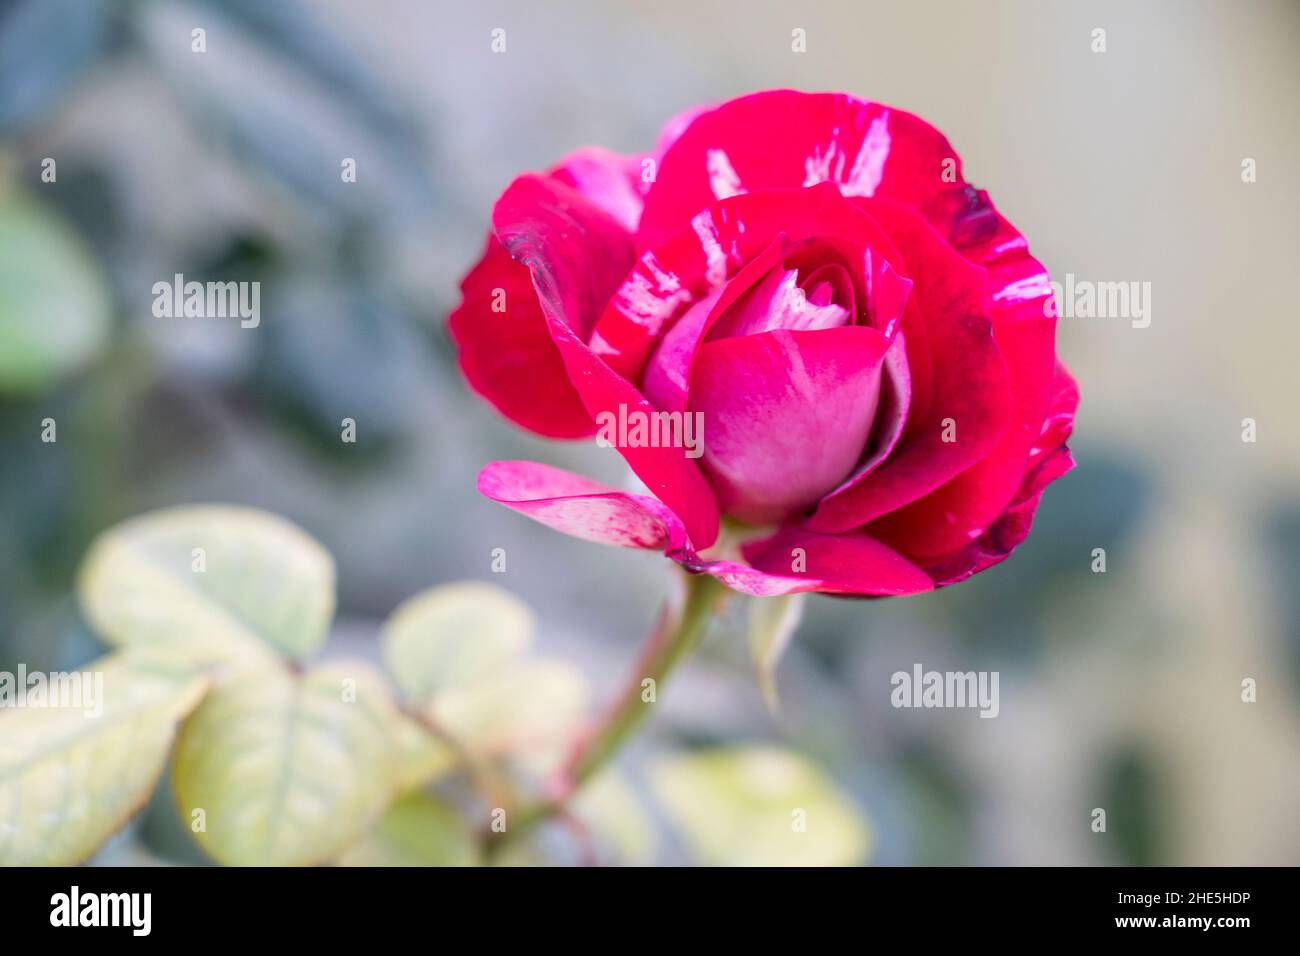 image of abrade dabra rose flower Stock Photo